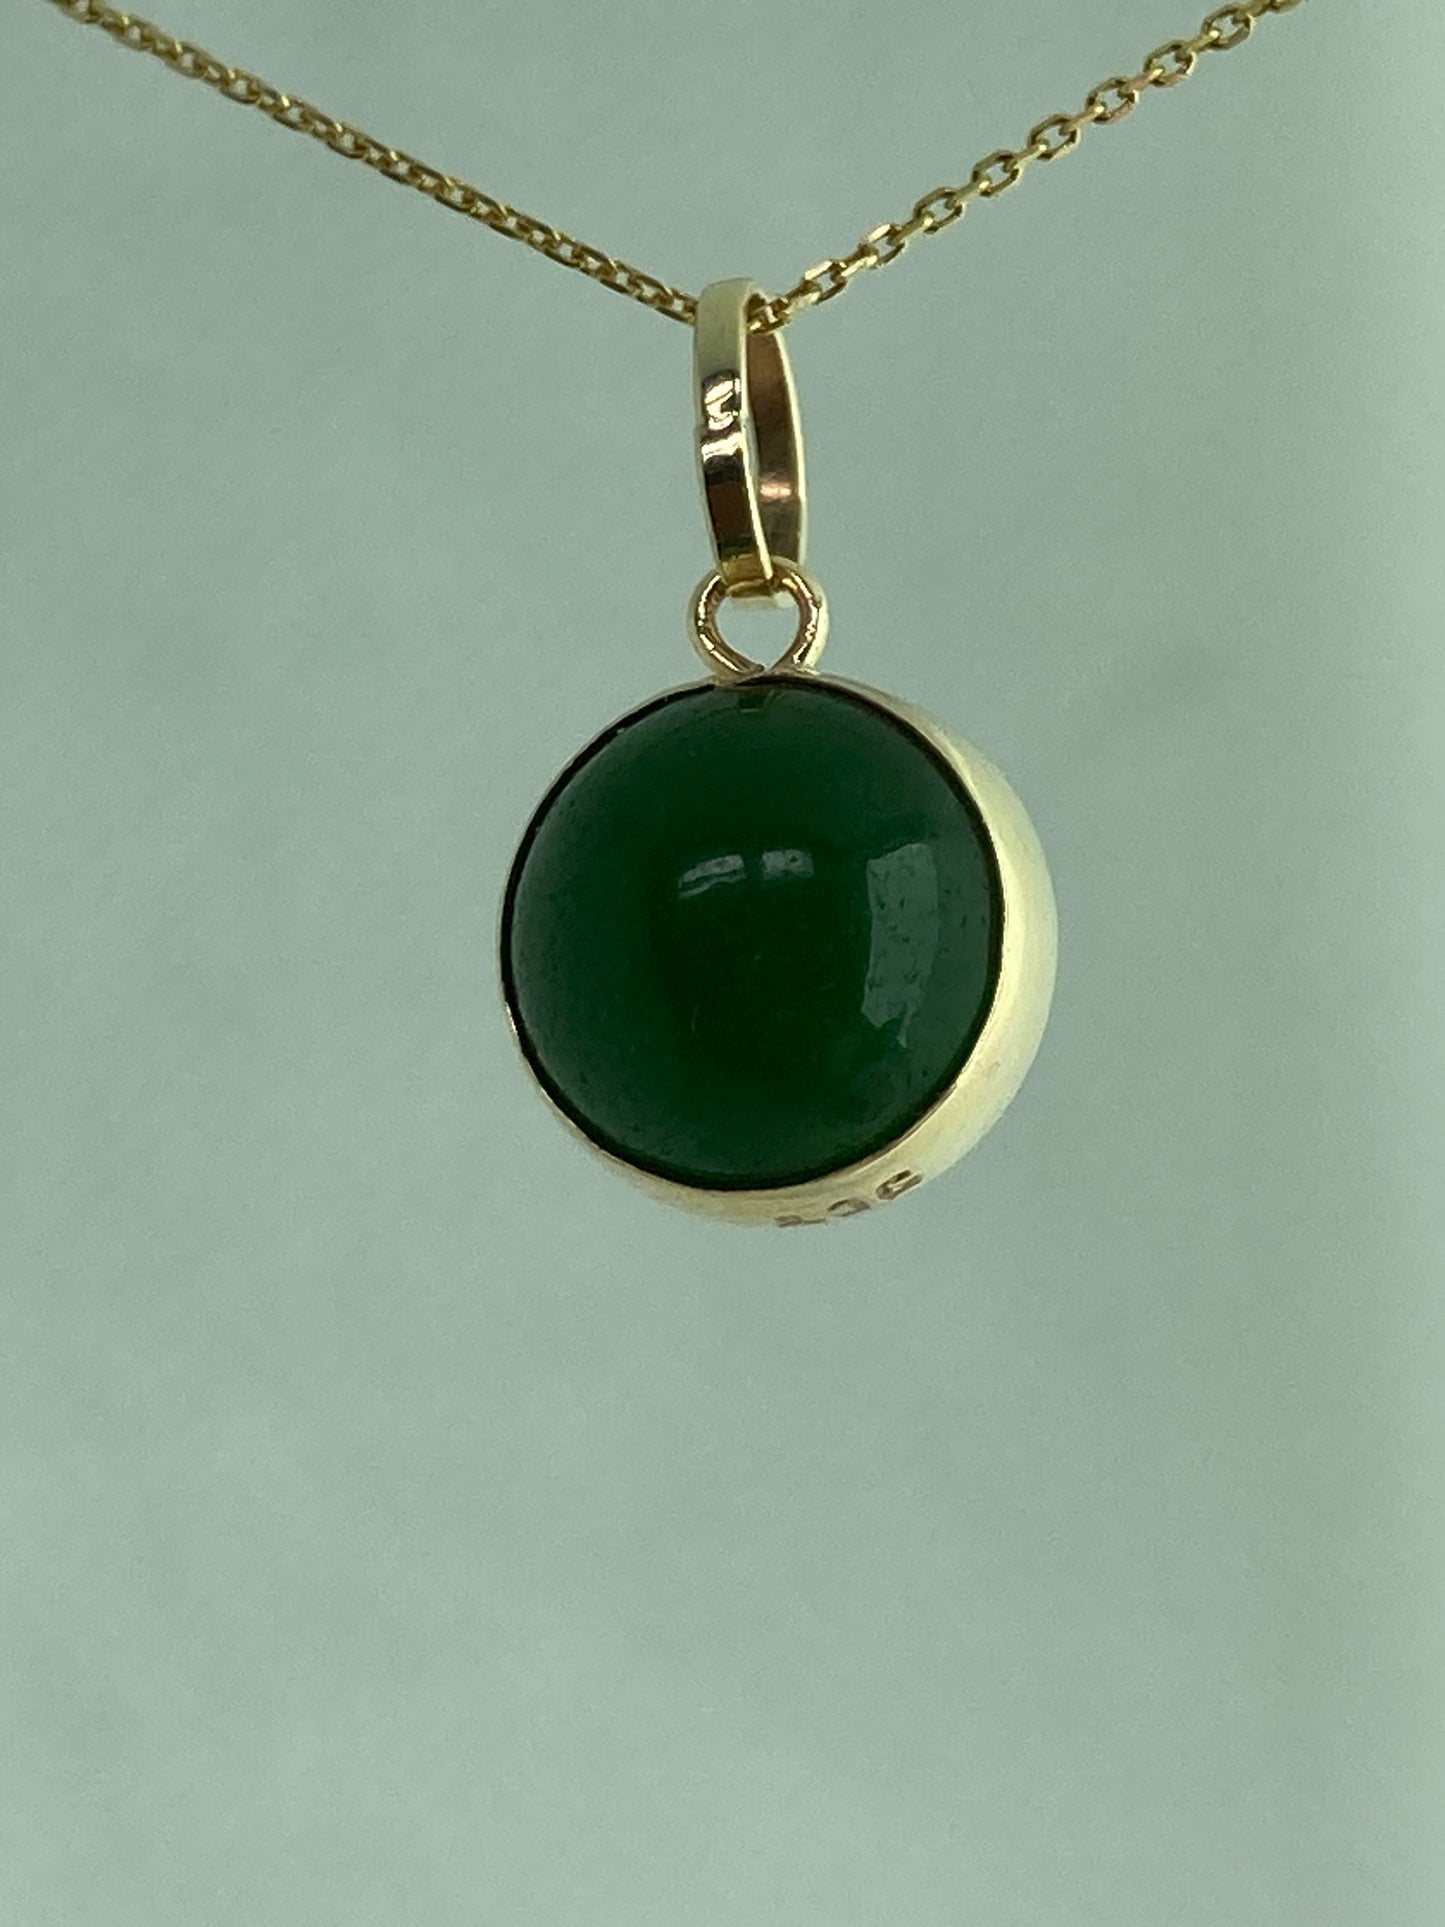 9ct gold Green jade pendant, 18” chain